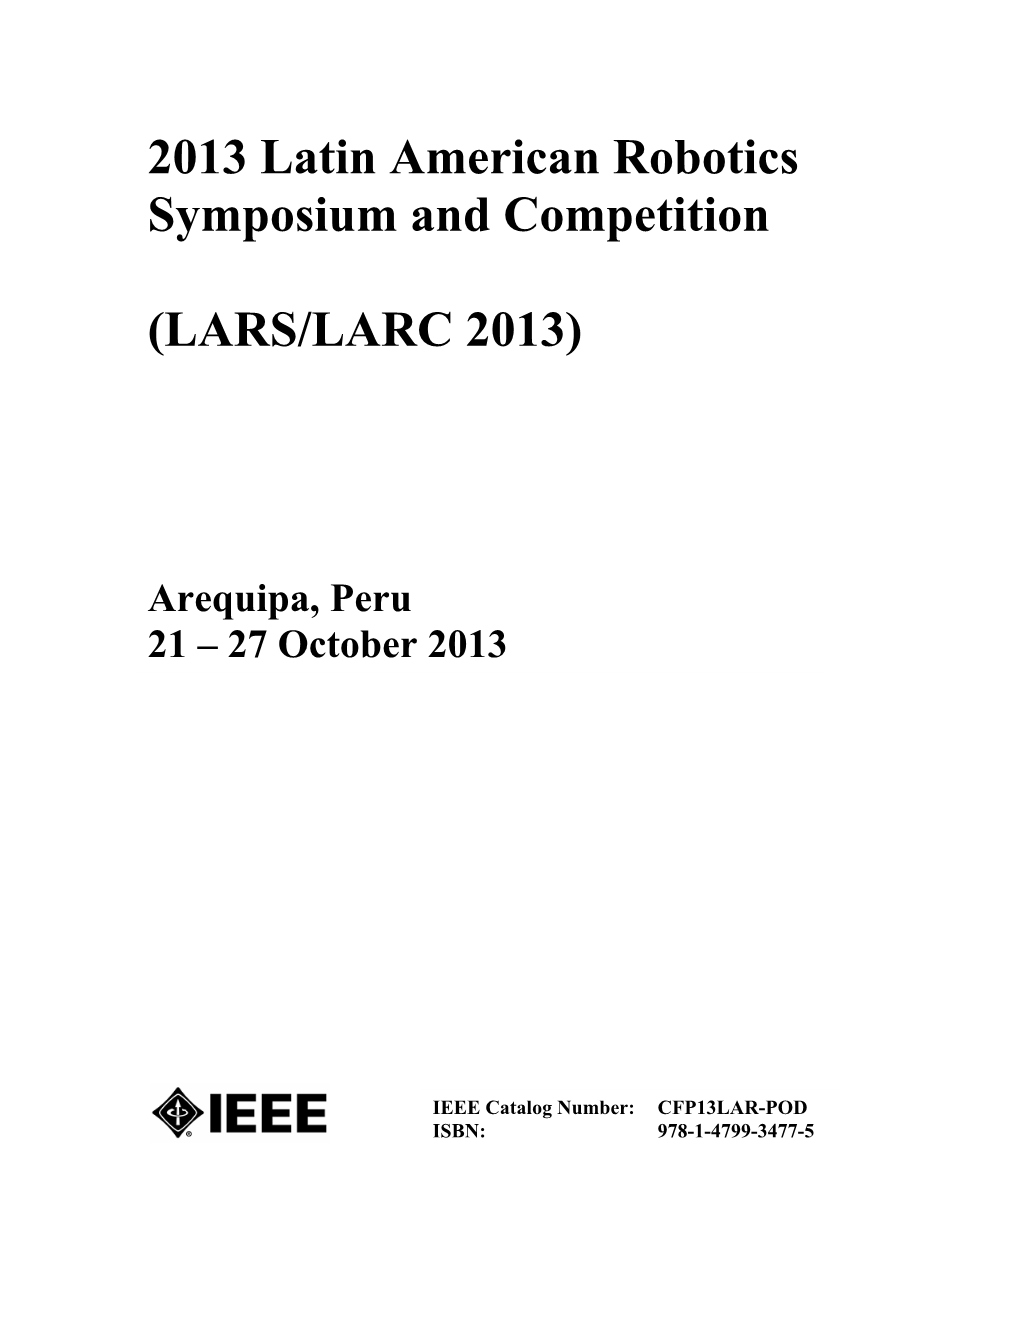 2013 Latin American Robotics Symposium and Competition